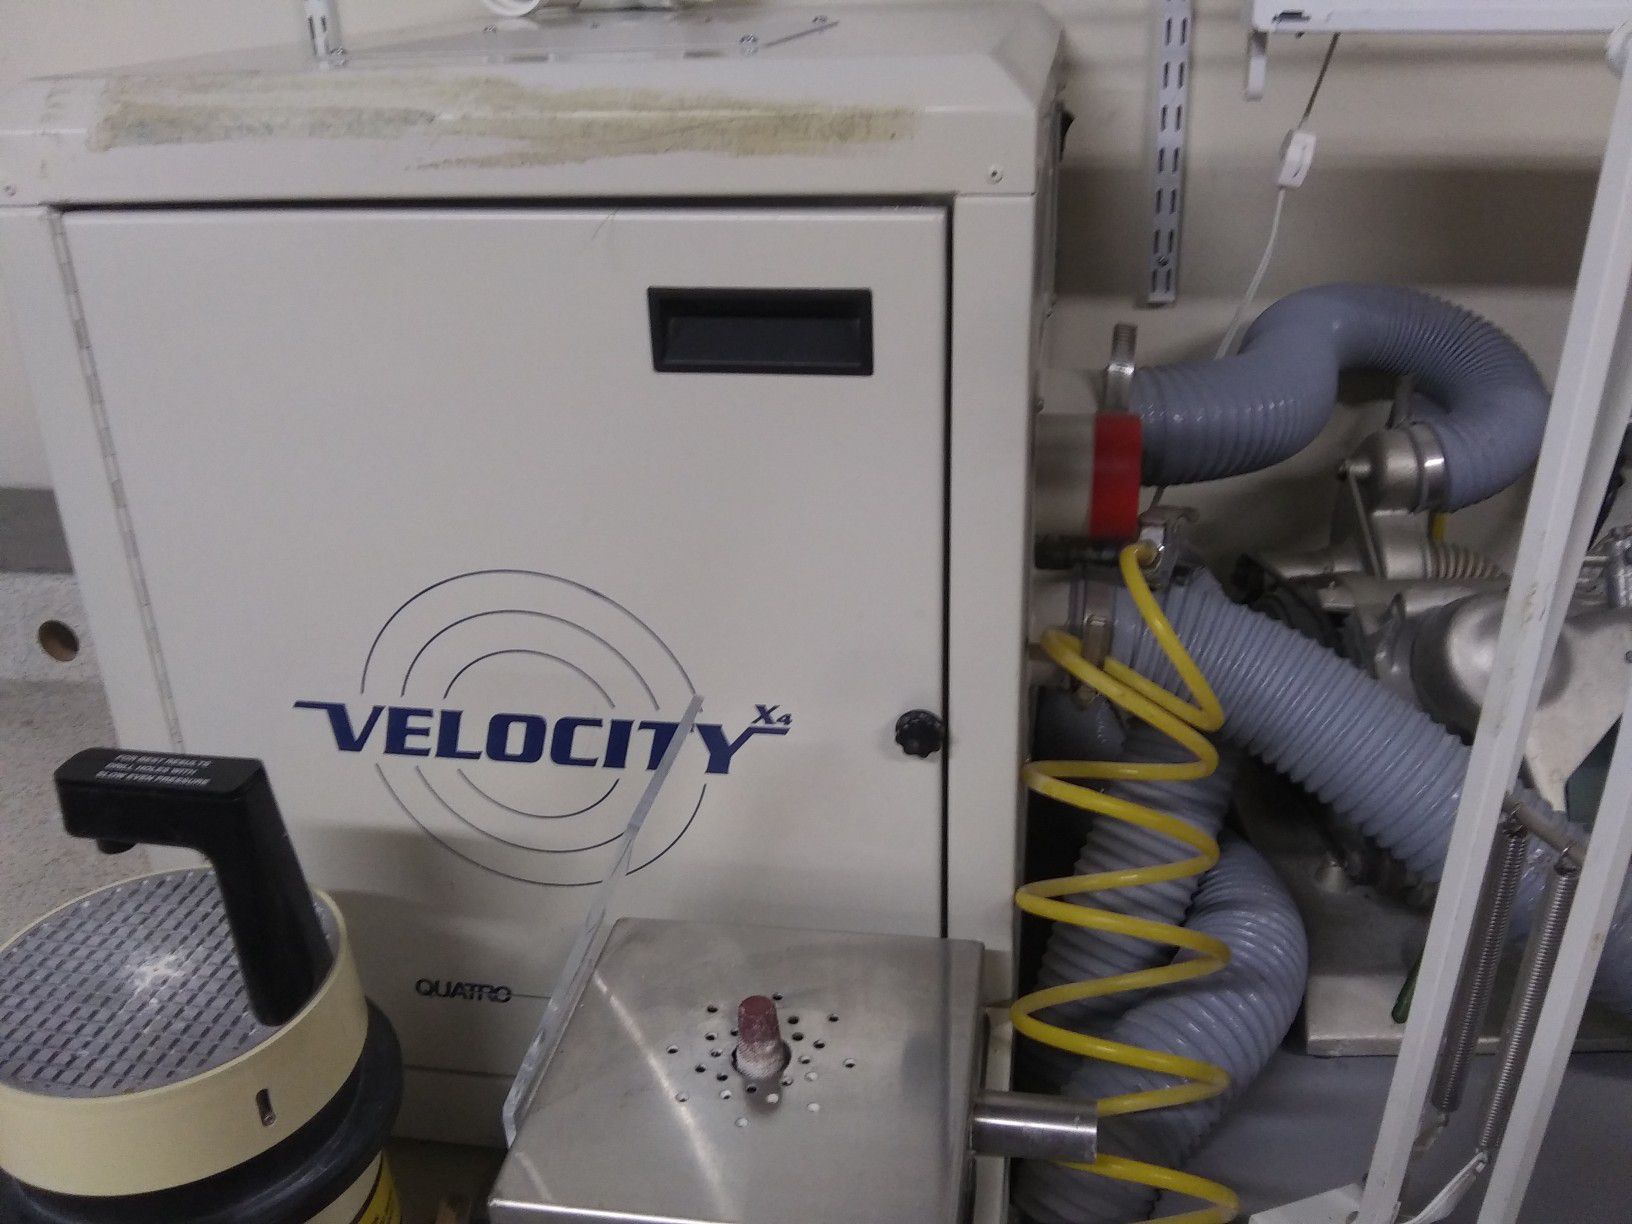 Velocity Dust Colector